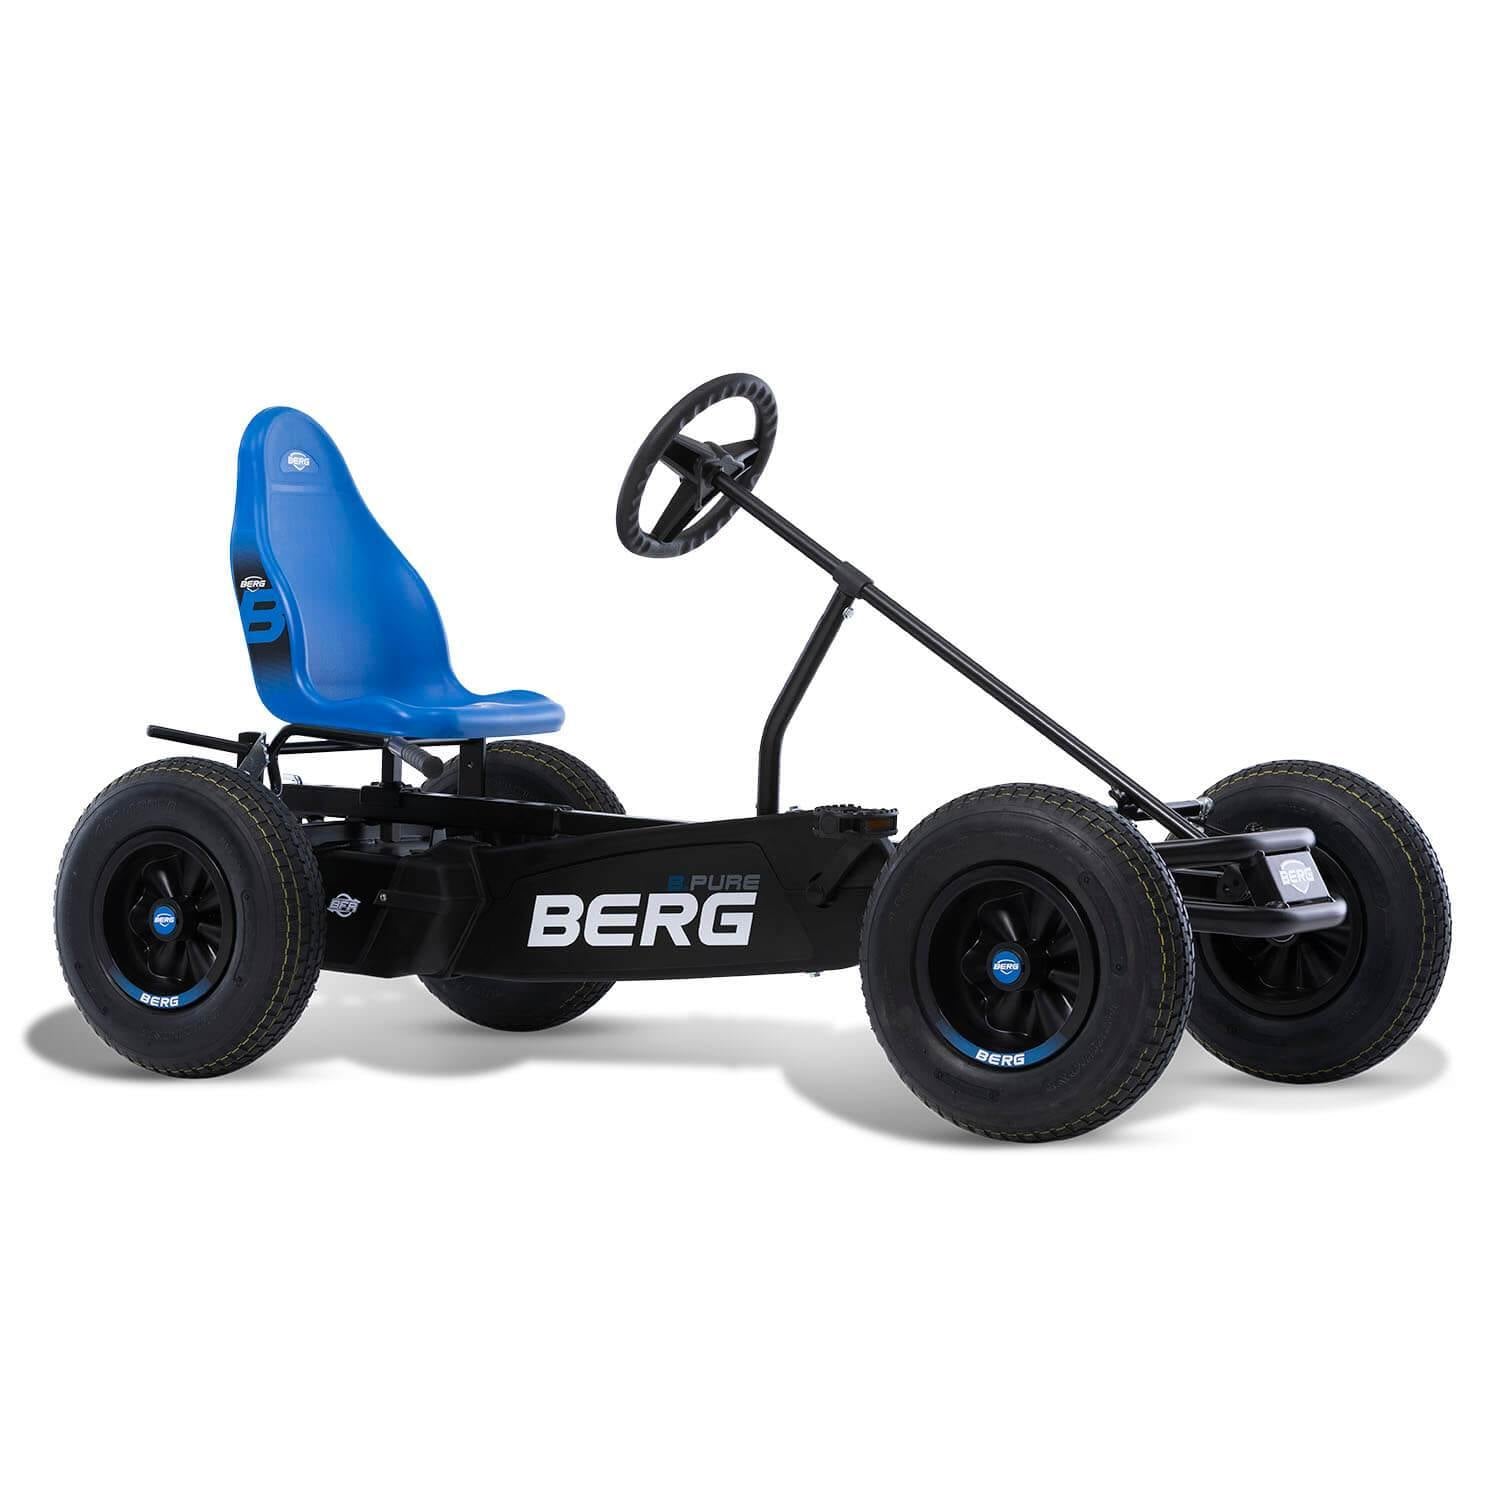 Berg USA Basic BFR Pedal Go Kart Riding Toy - Blue - XL